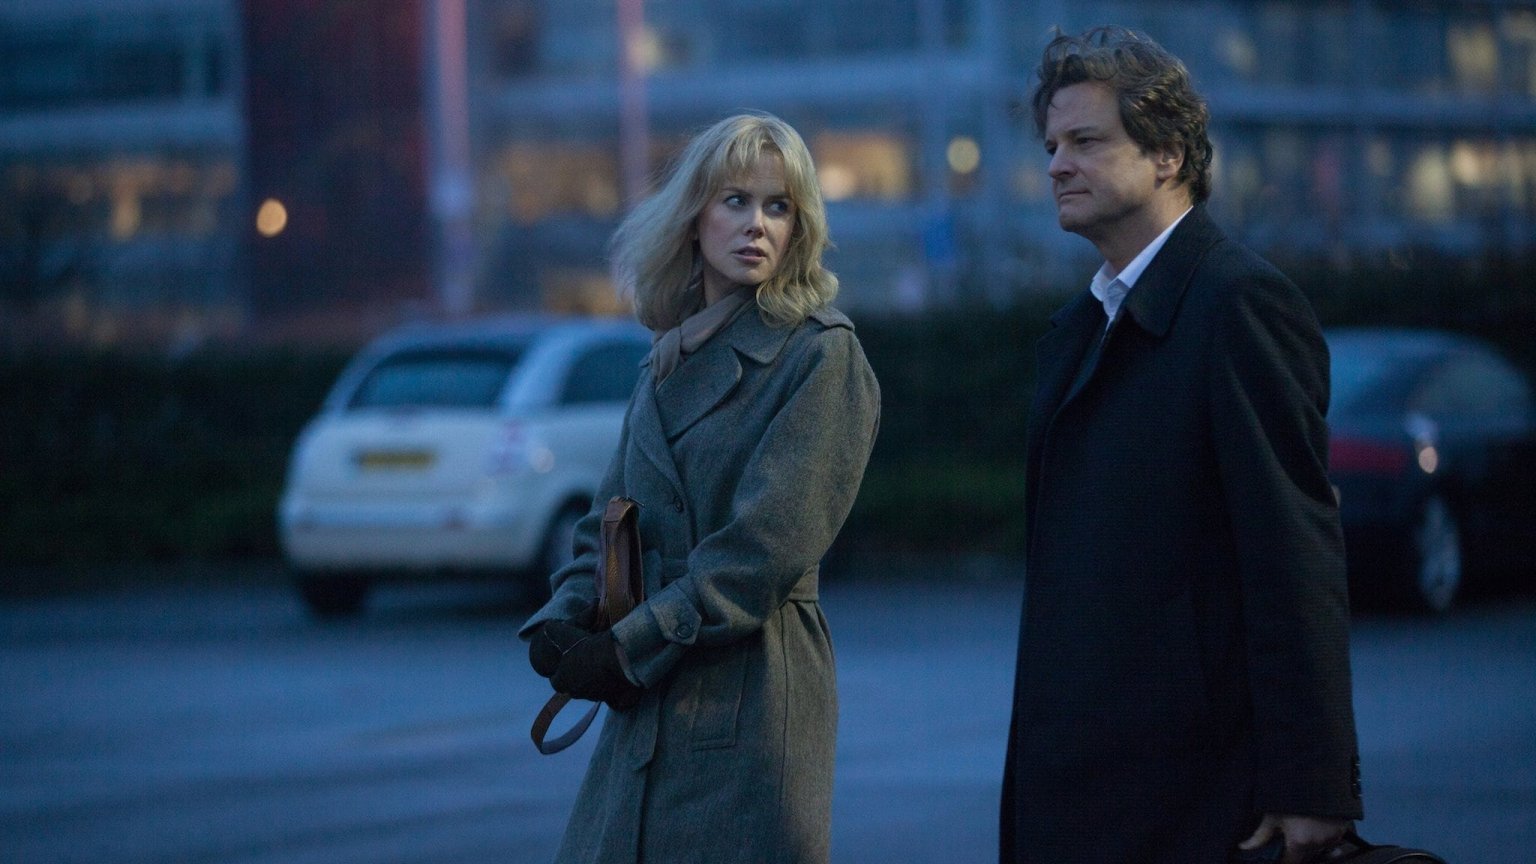 Vanavond op tv: Nicole Kidman en Colin Firth in mysterieuze thriller 'Before I Go to Sleep'